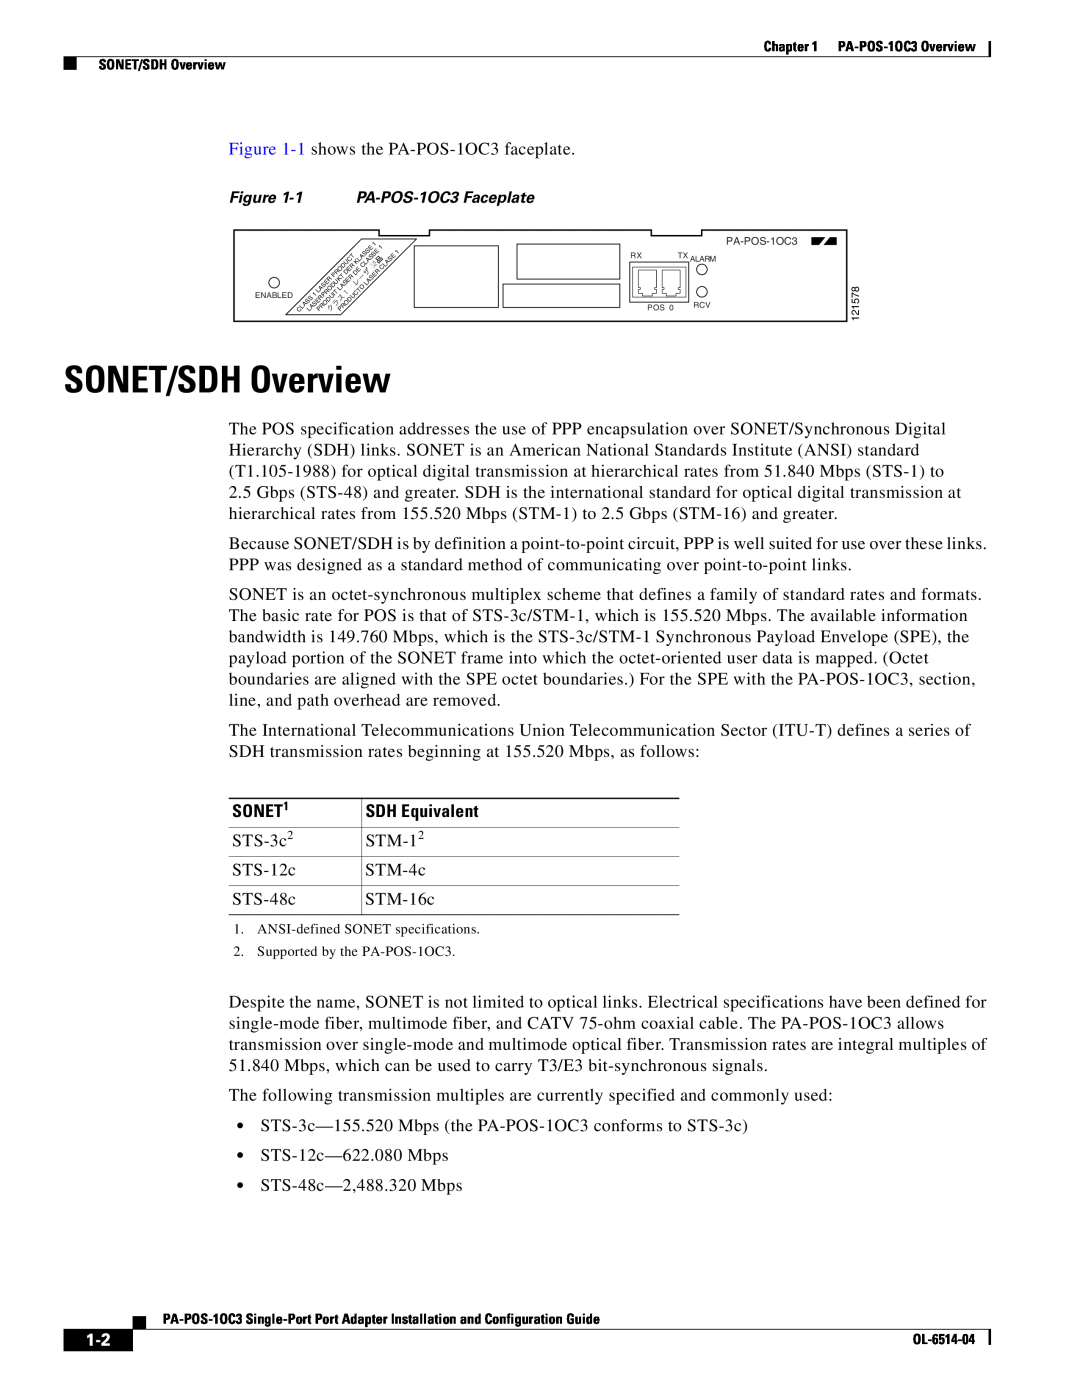 Cisco Systems PA-POS-2OC3, PA-POS-1OC3 manual SONET/SDH Overview, Sonet, SDH Equivalent 